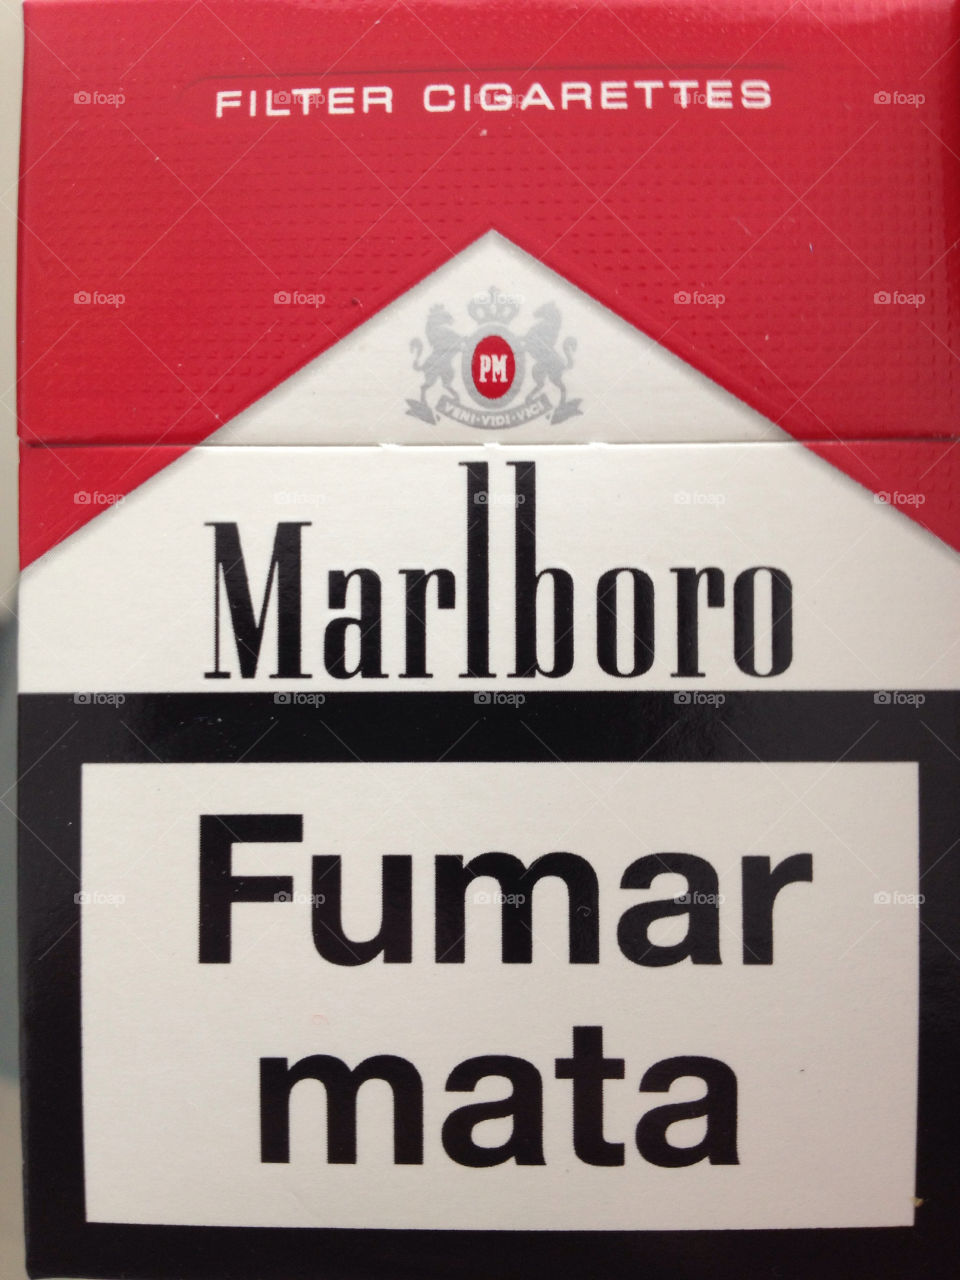 red marlboro portugal cigarettes by danieltimofan